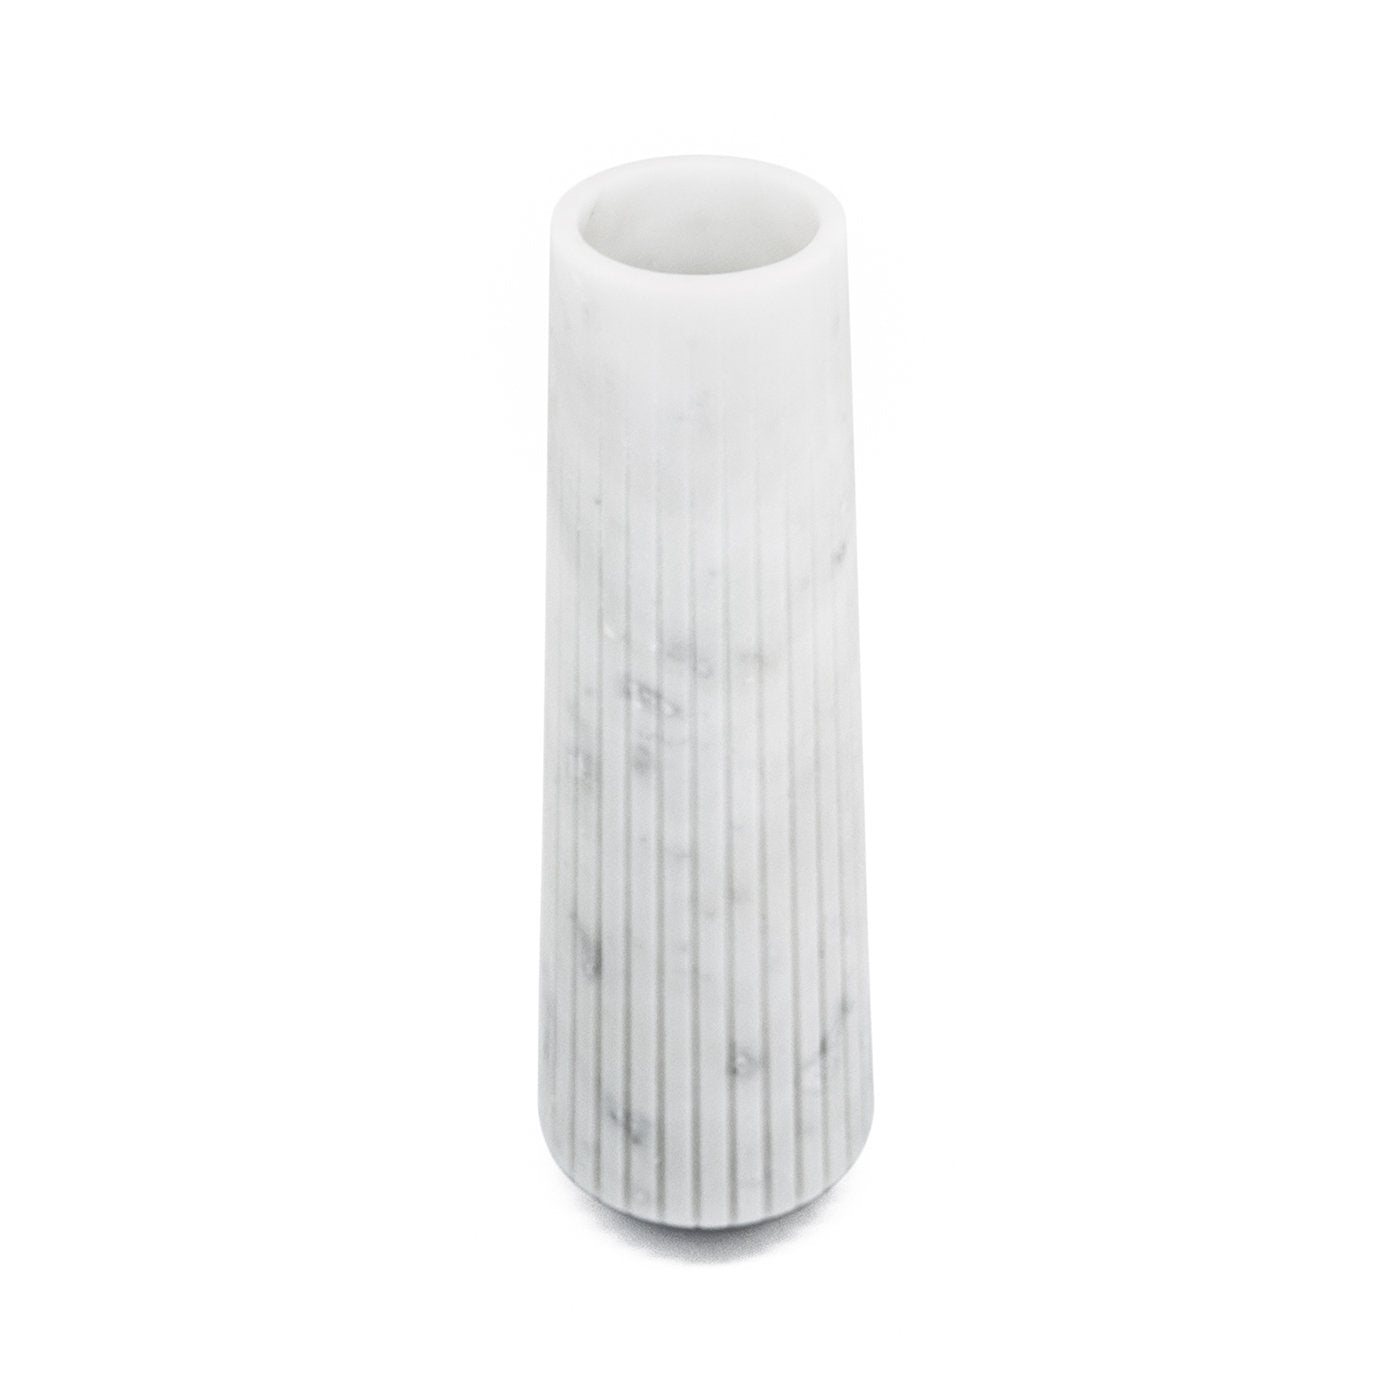 Grand vase en marbre blanc de Carrare Jacopo Simonetti - Vue alternative 2